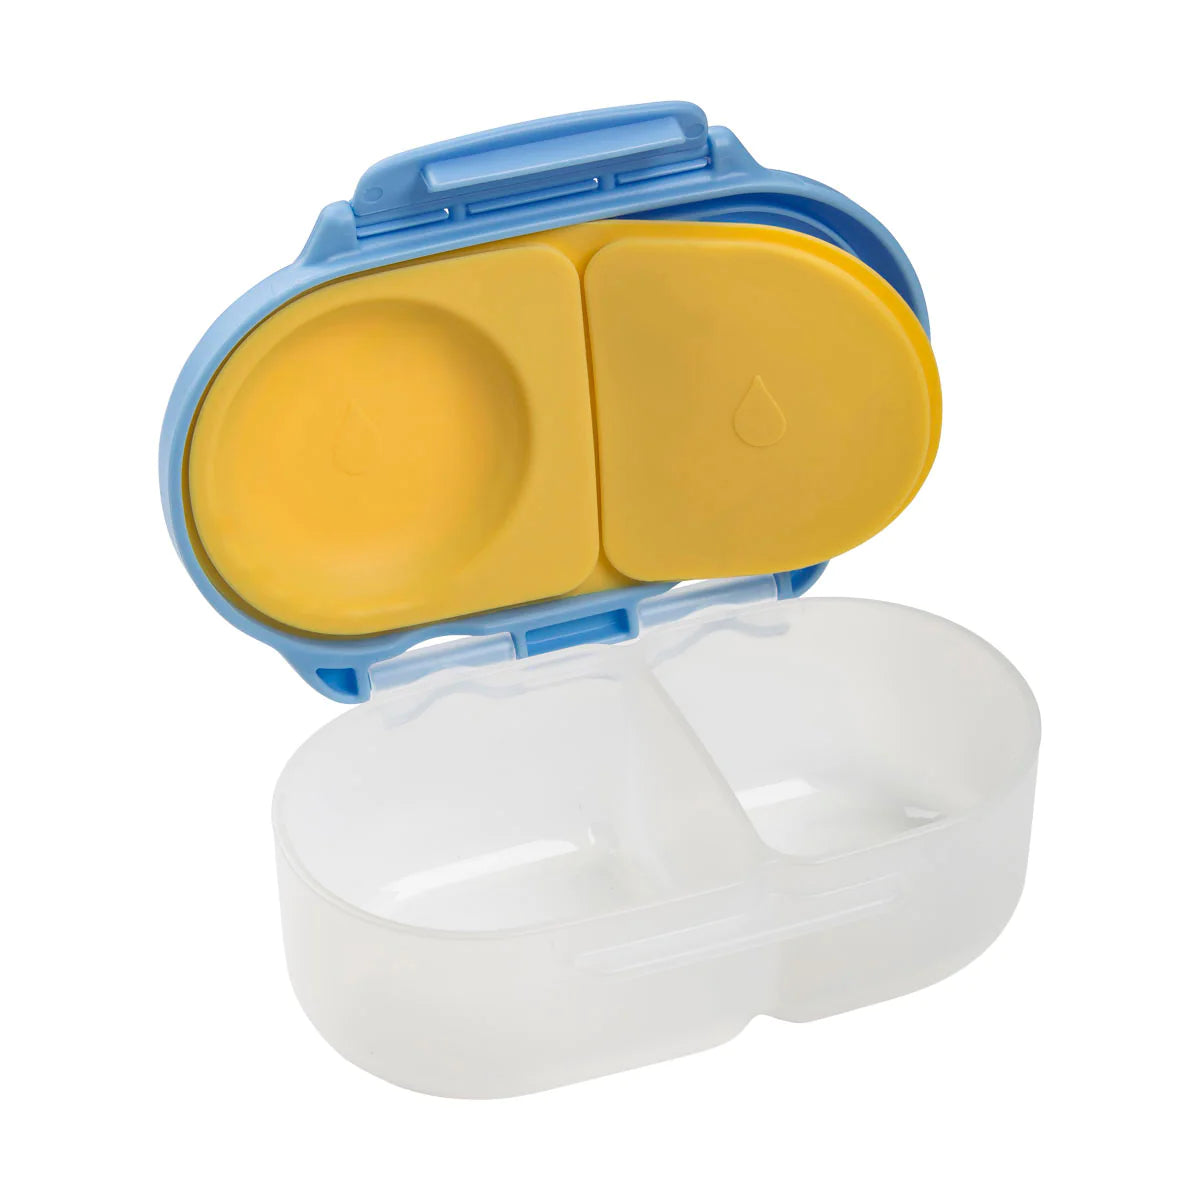 b.box Mini Lunch Box - Bluey